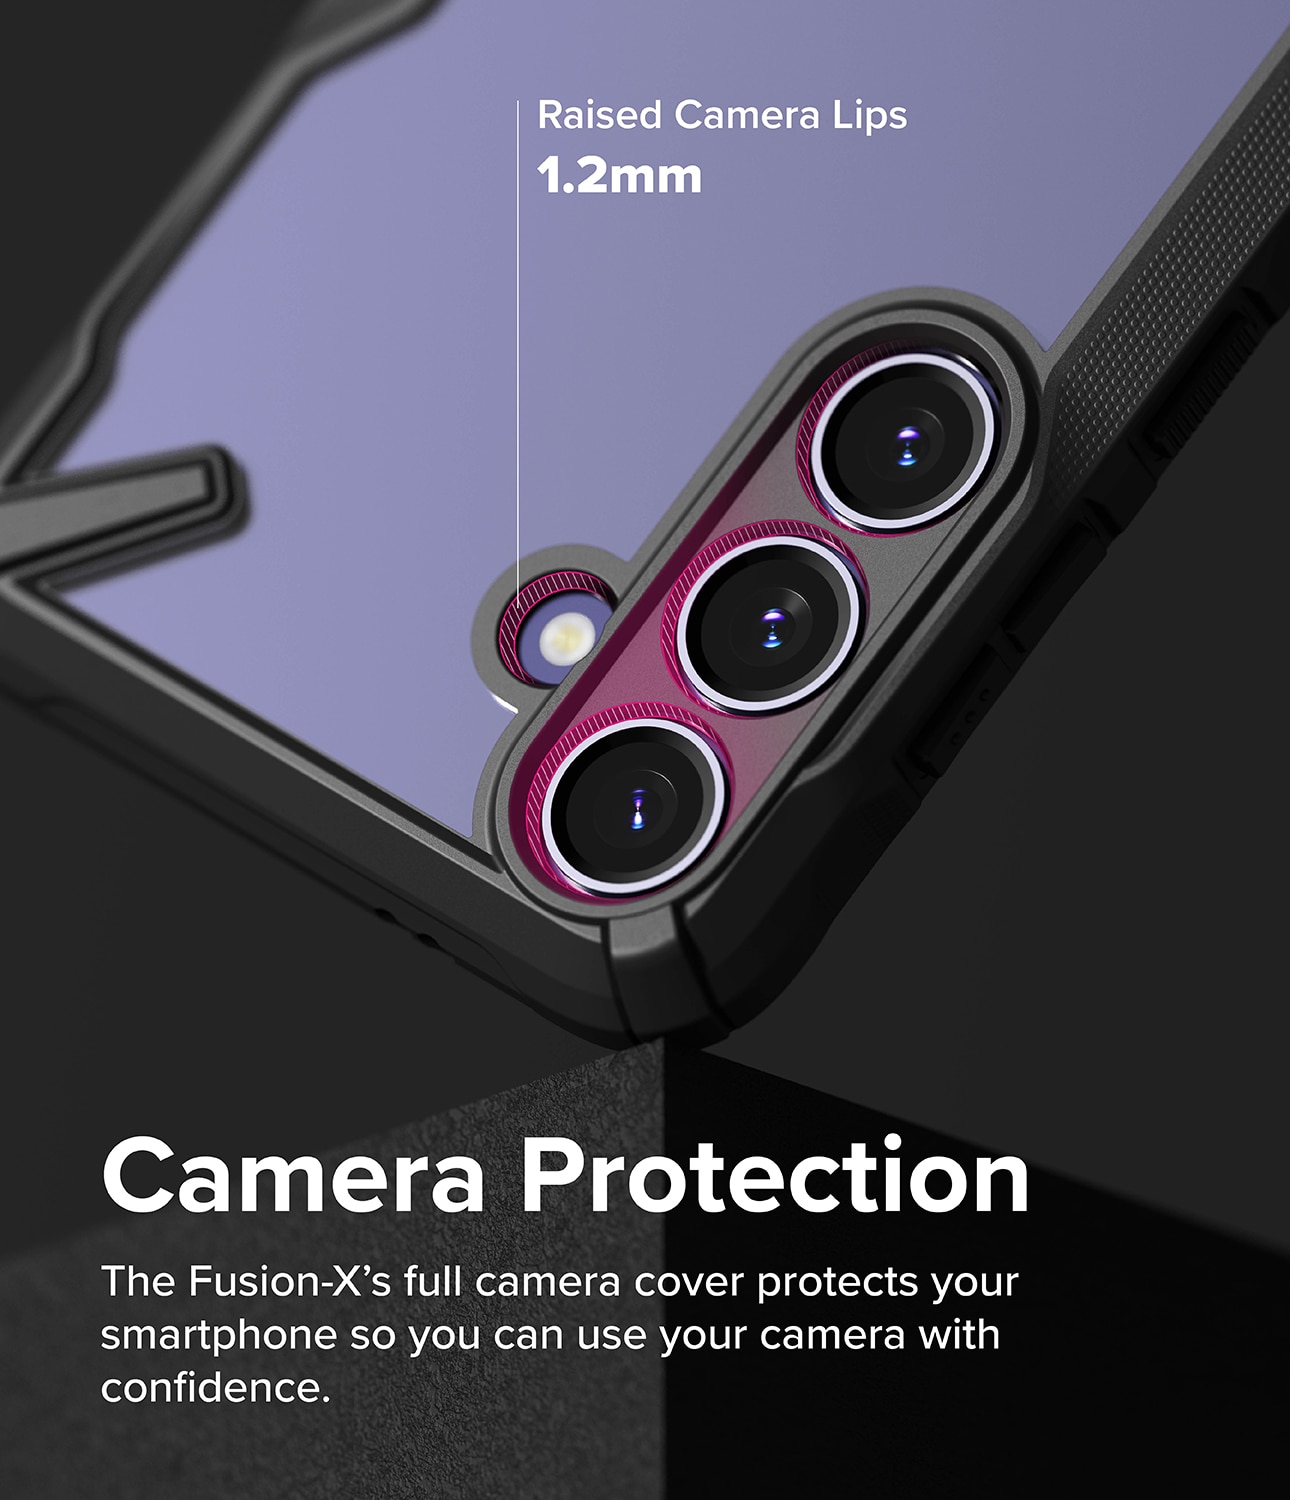 Fusion X Case Samsung Galaxy S24 Plus schwarz